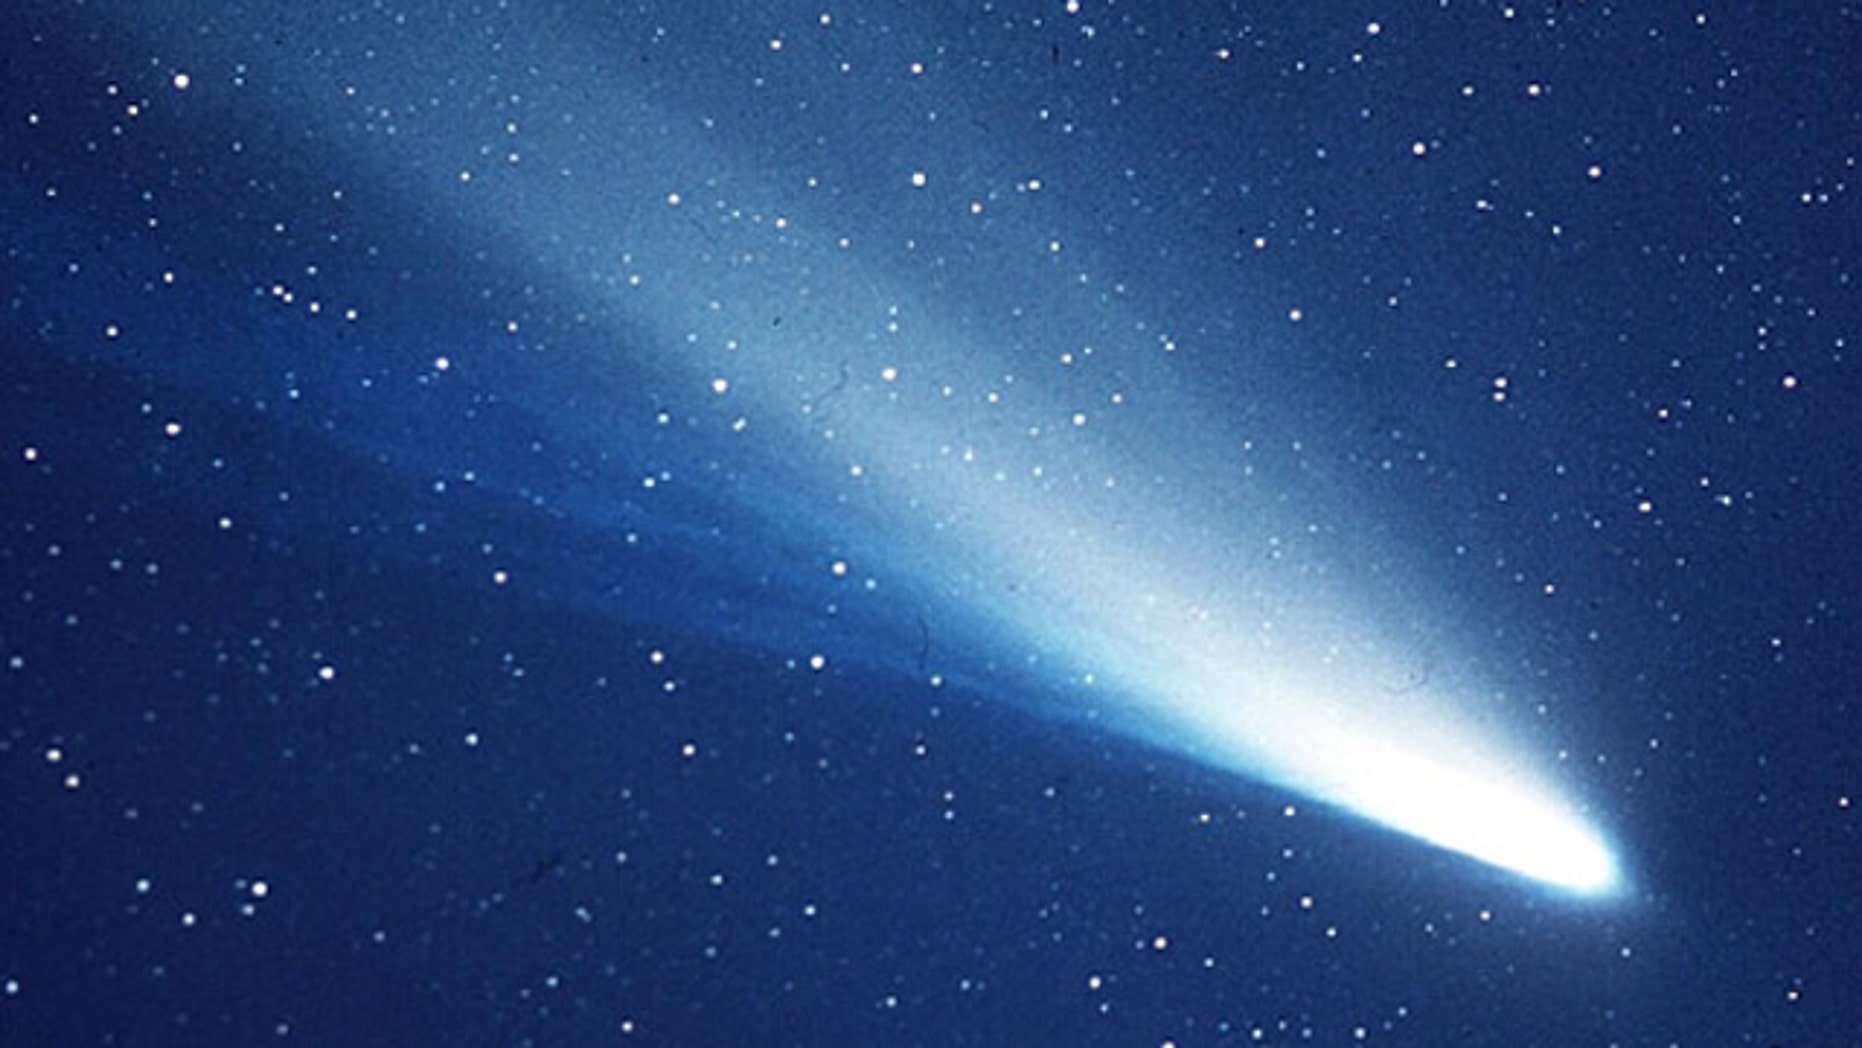 when did halley's comet last visit earth